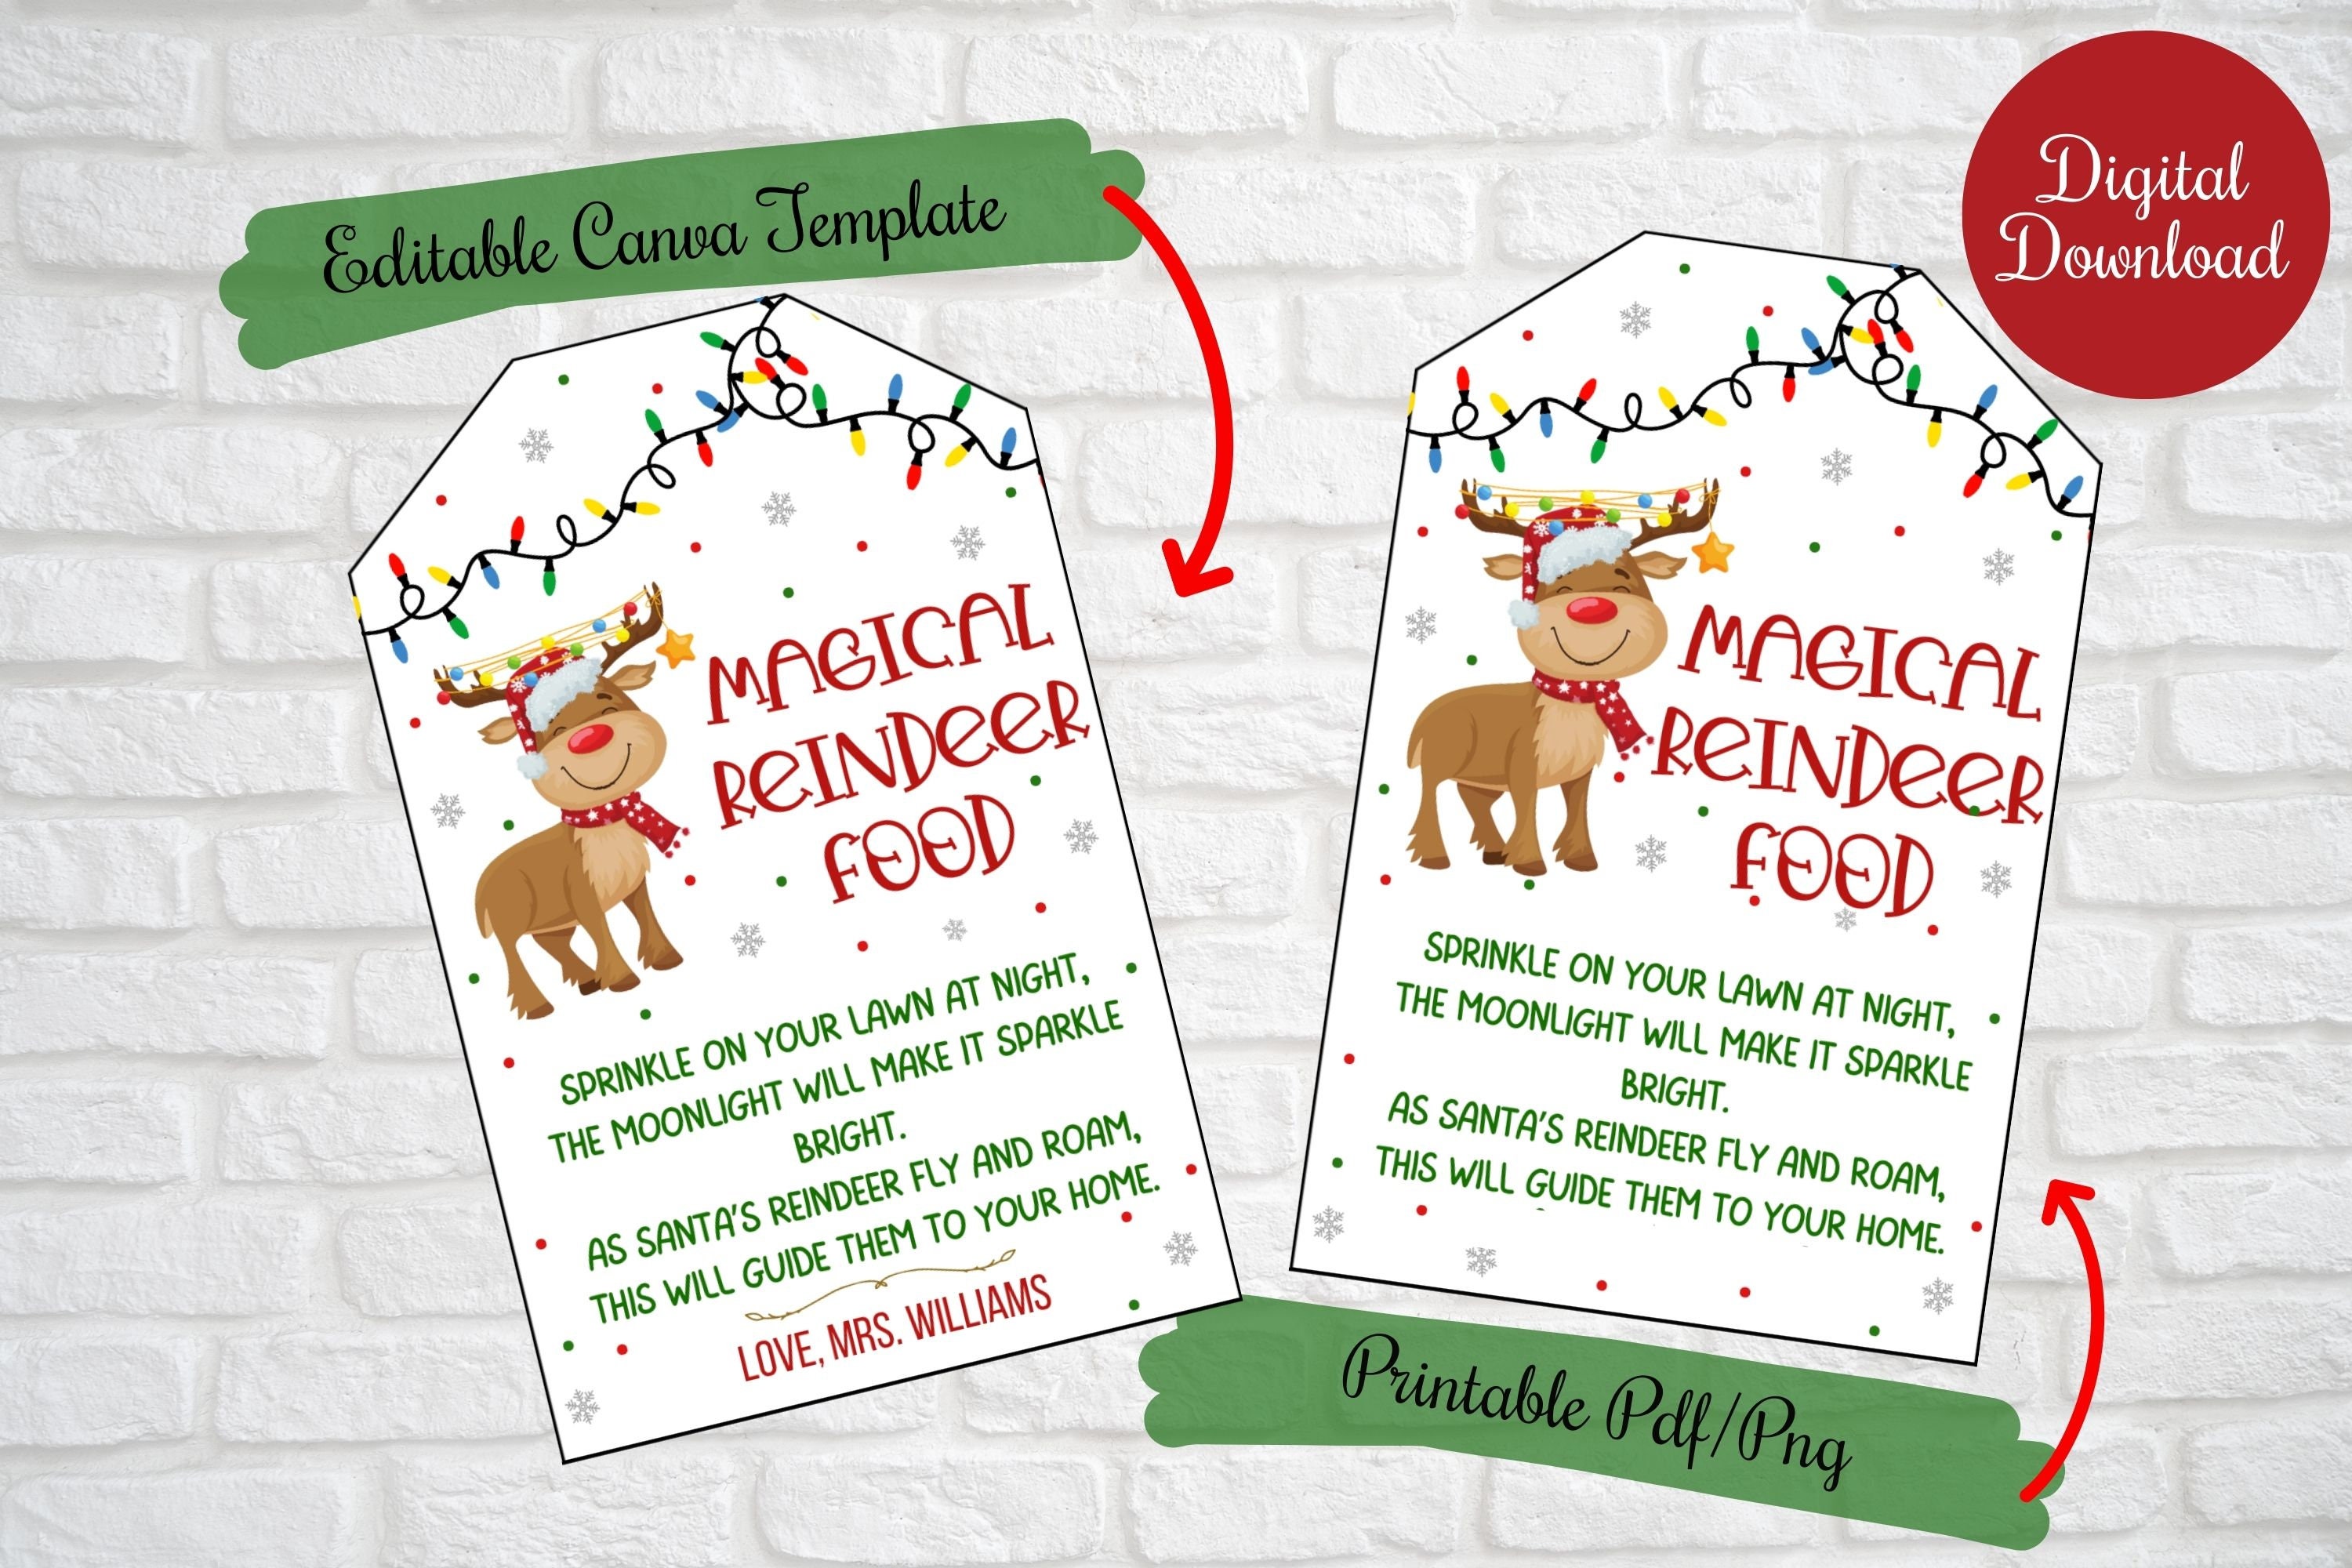 Magic Reindeer Food (+ FREE Poem Printable!) - I Heart Naptime